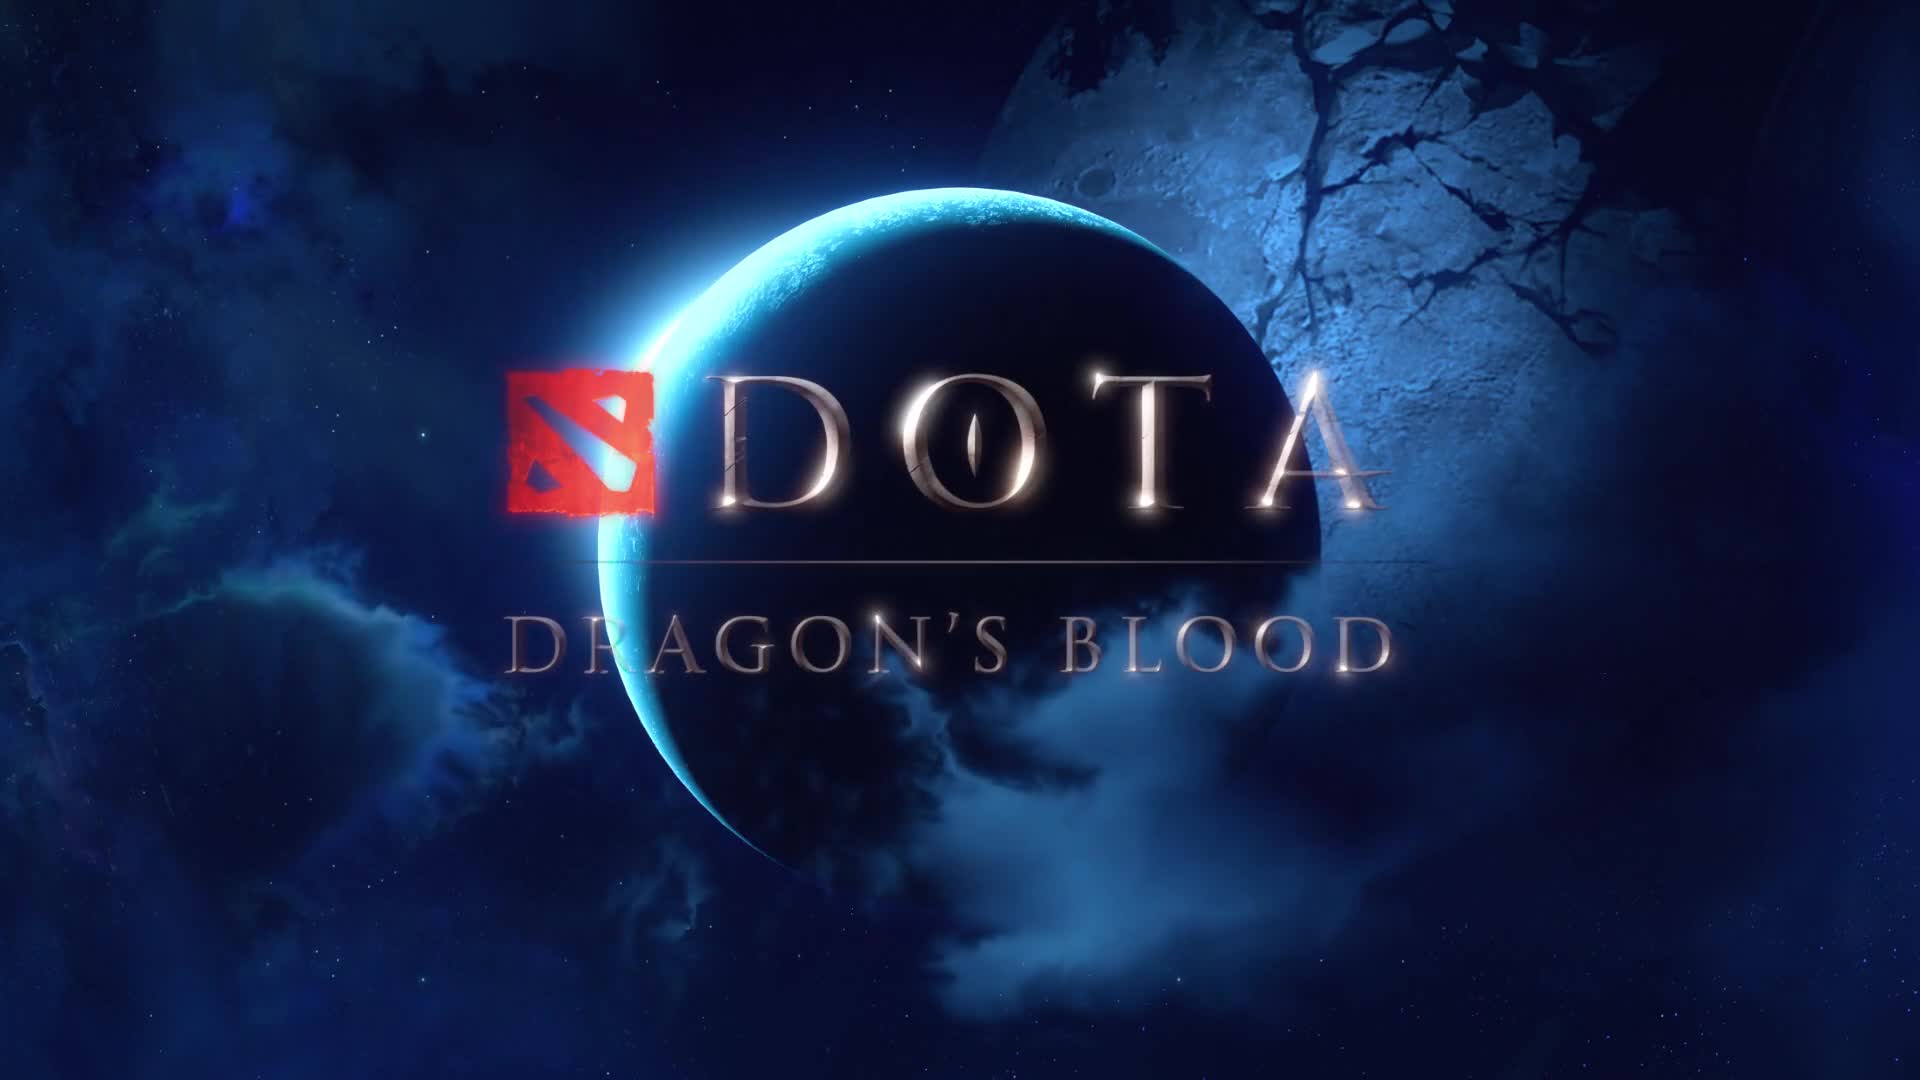 Dota: Dragon's Blood (Dub)